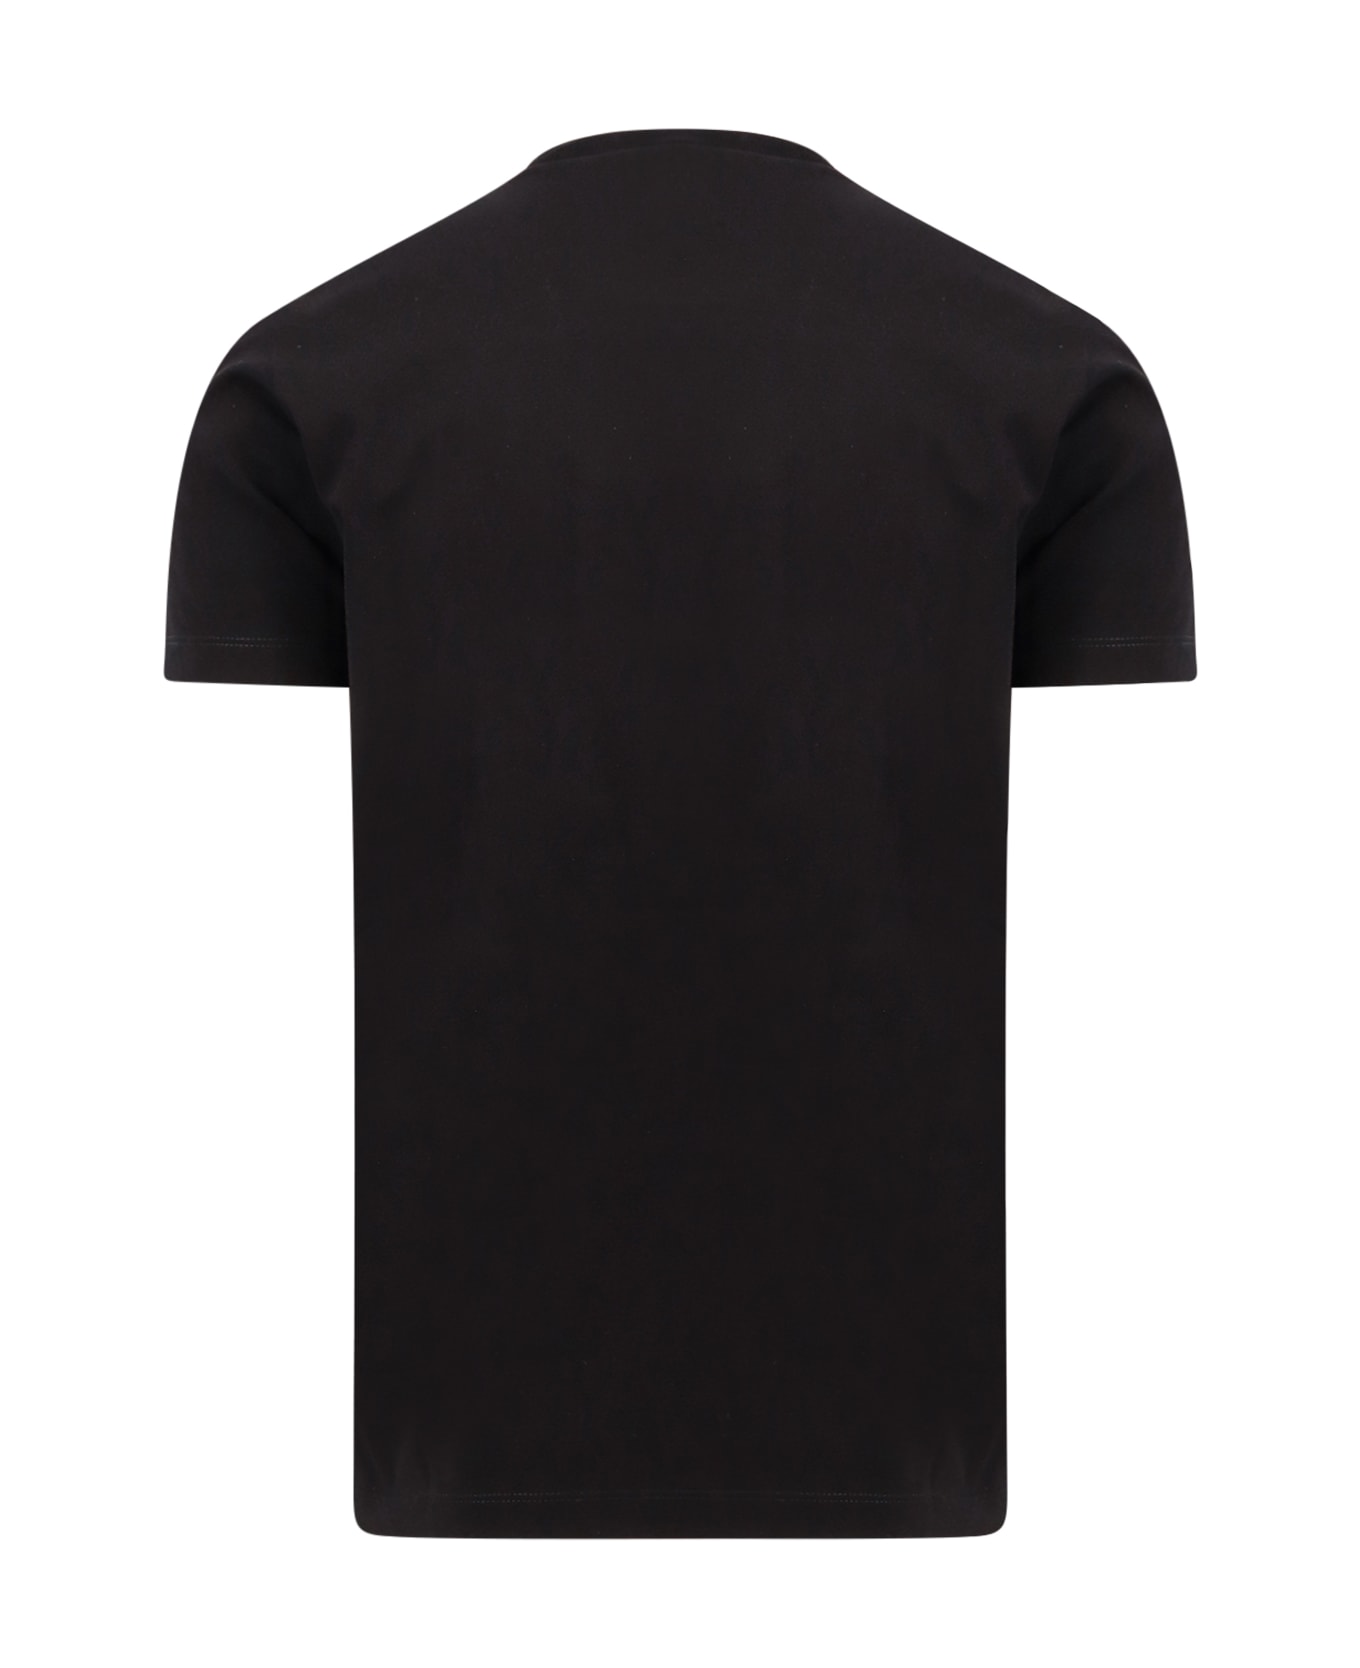 Dsquared2 T-shirt - BLACK シャツ